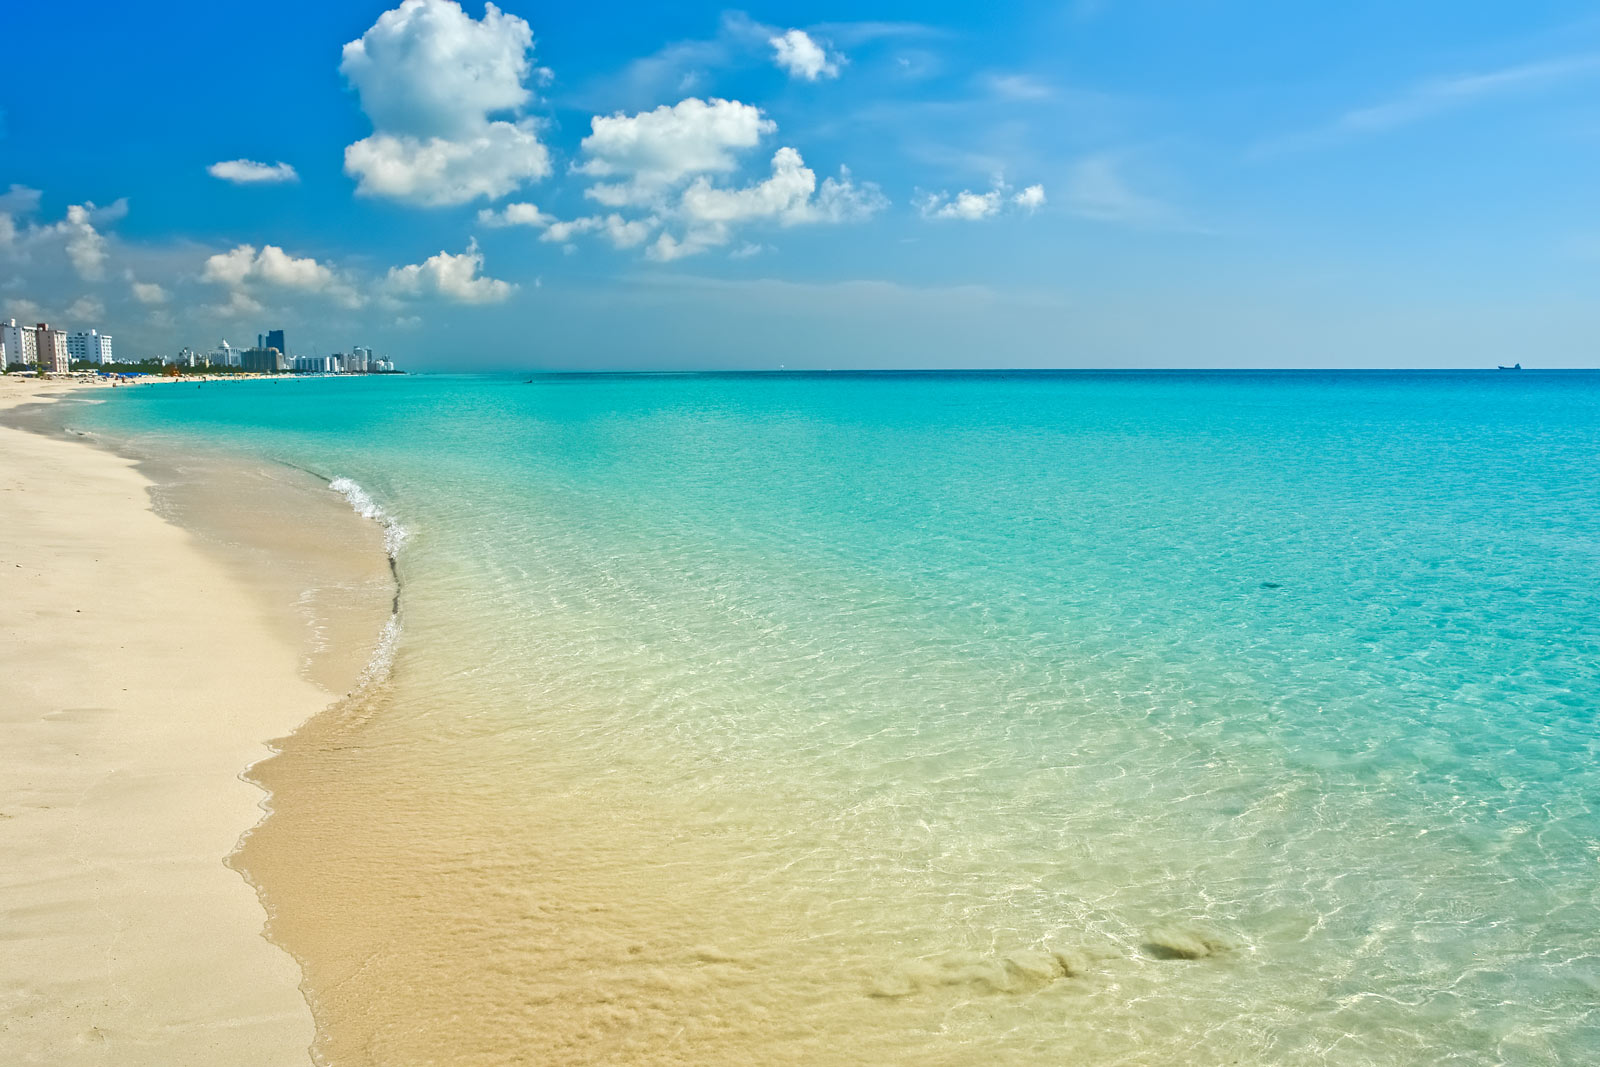 beaches in florida - South Beach in Miami Florida